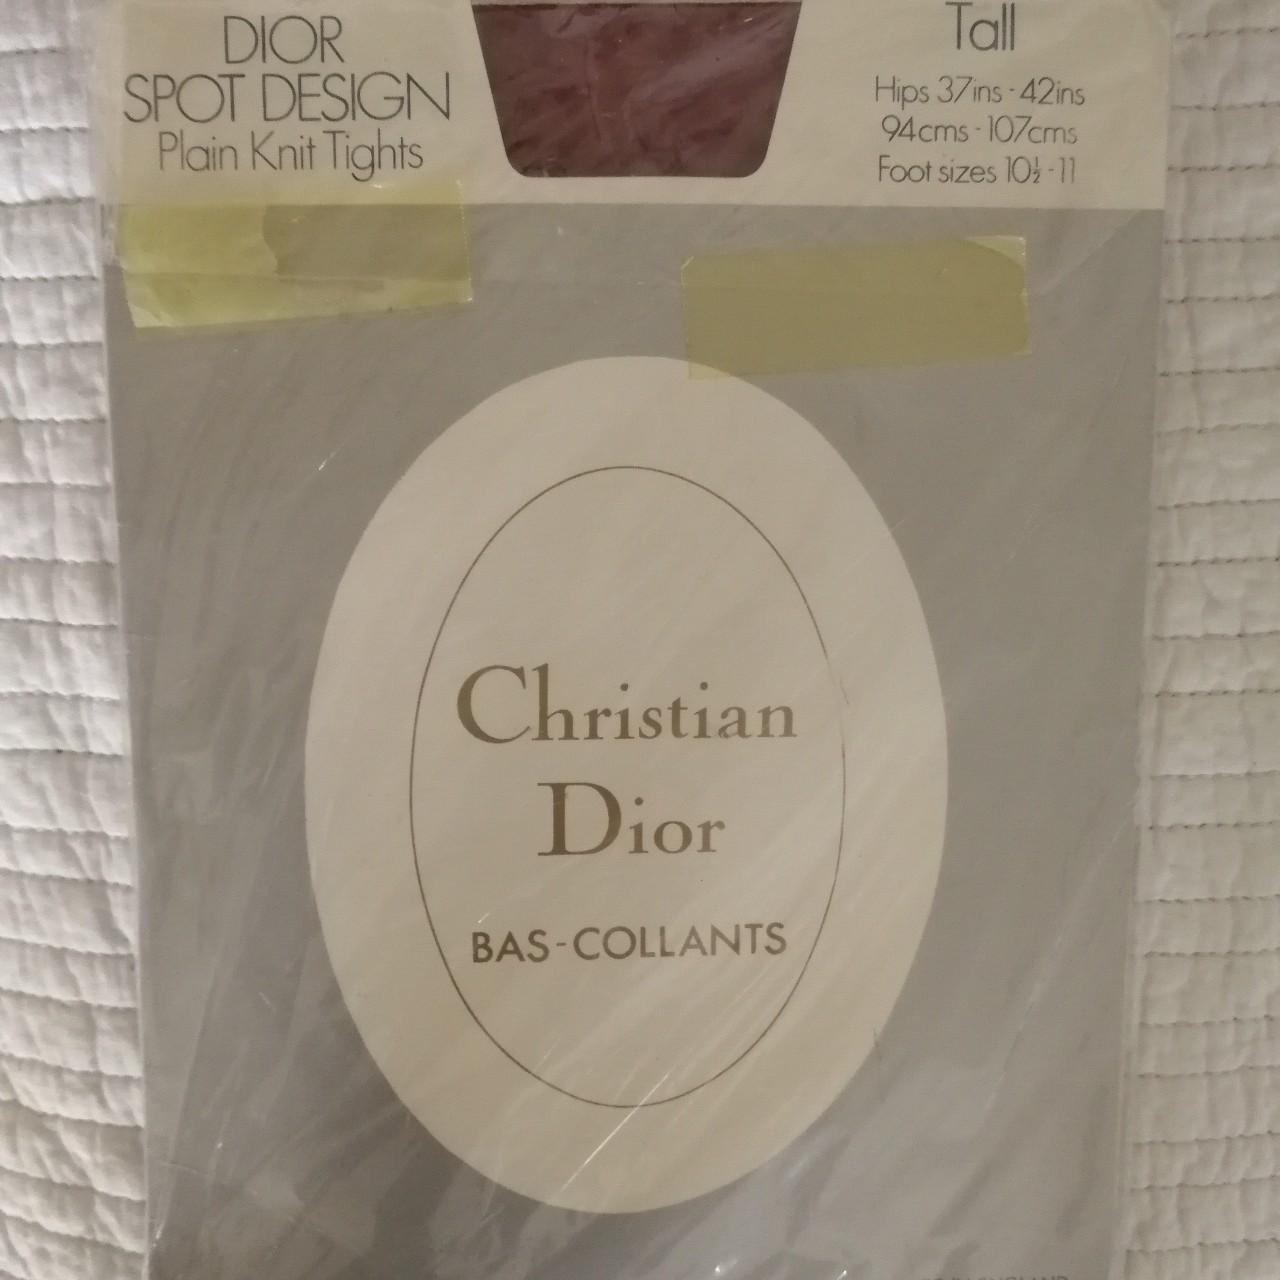 Christian Dior Spot Design Tights 